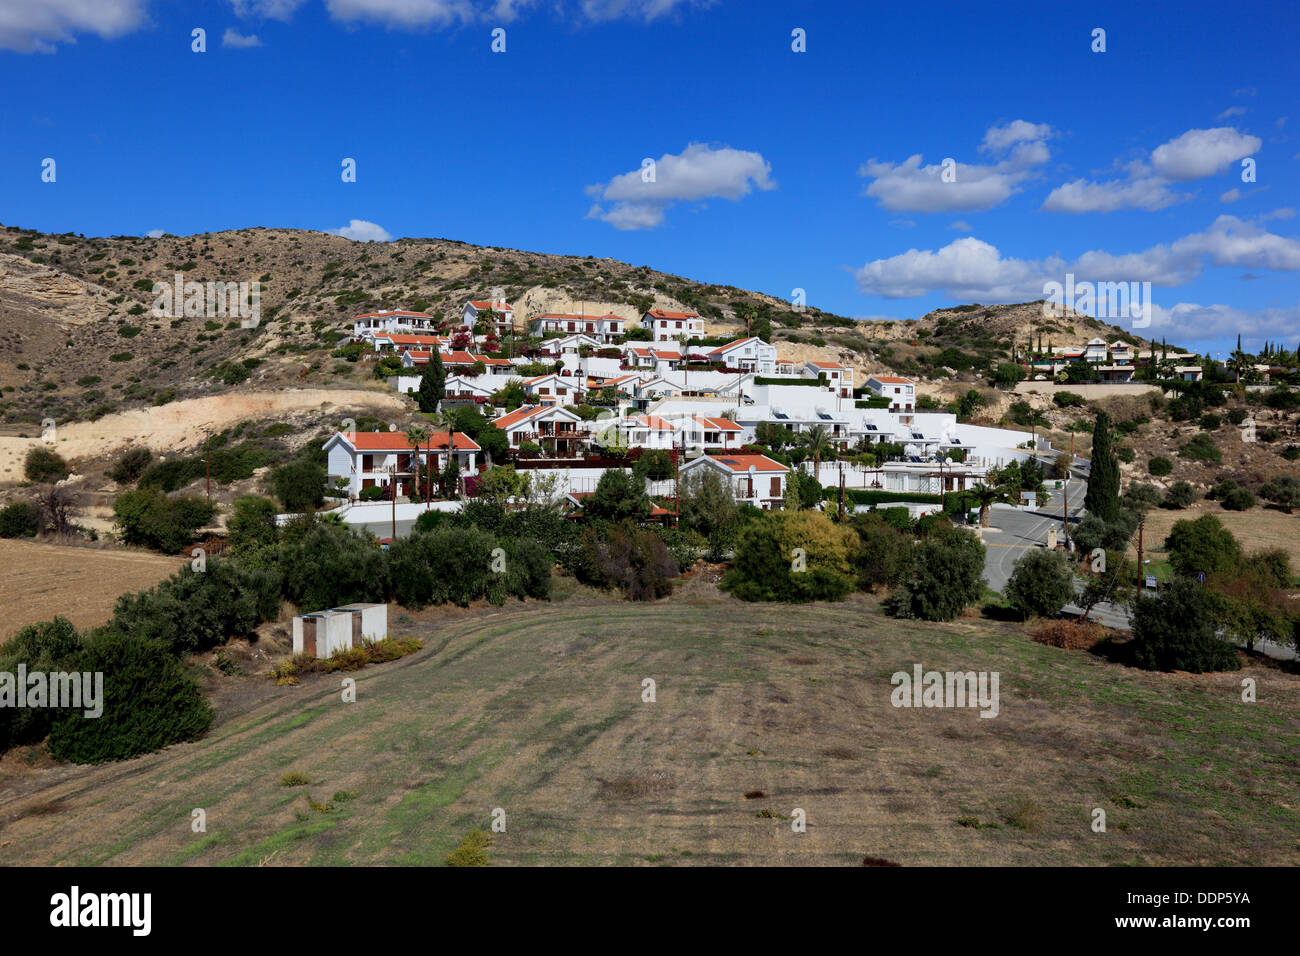 Cyprus, Pissouri, new estate, apartments Stock Photo